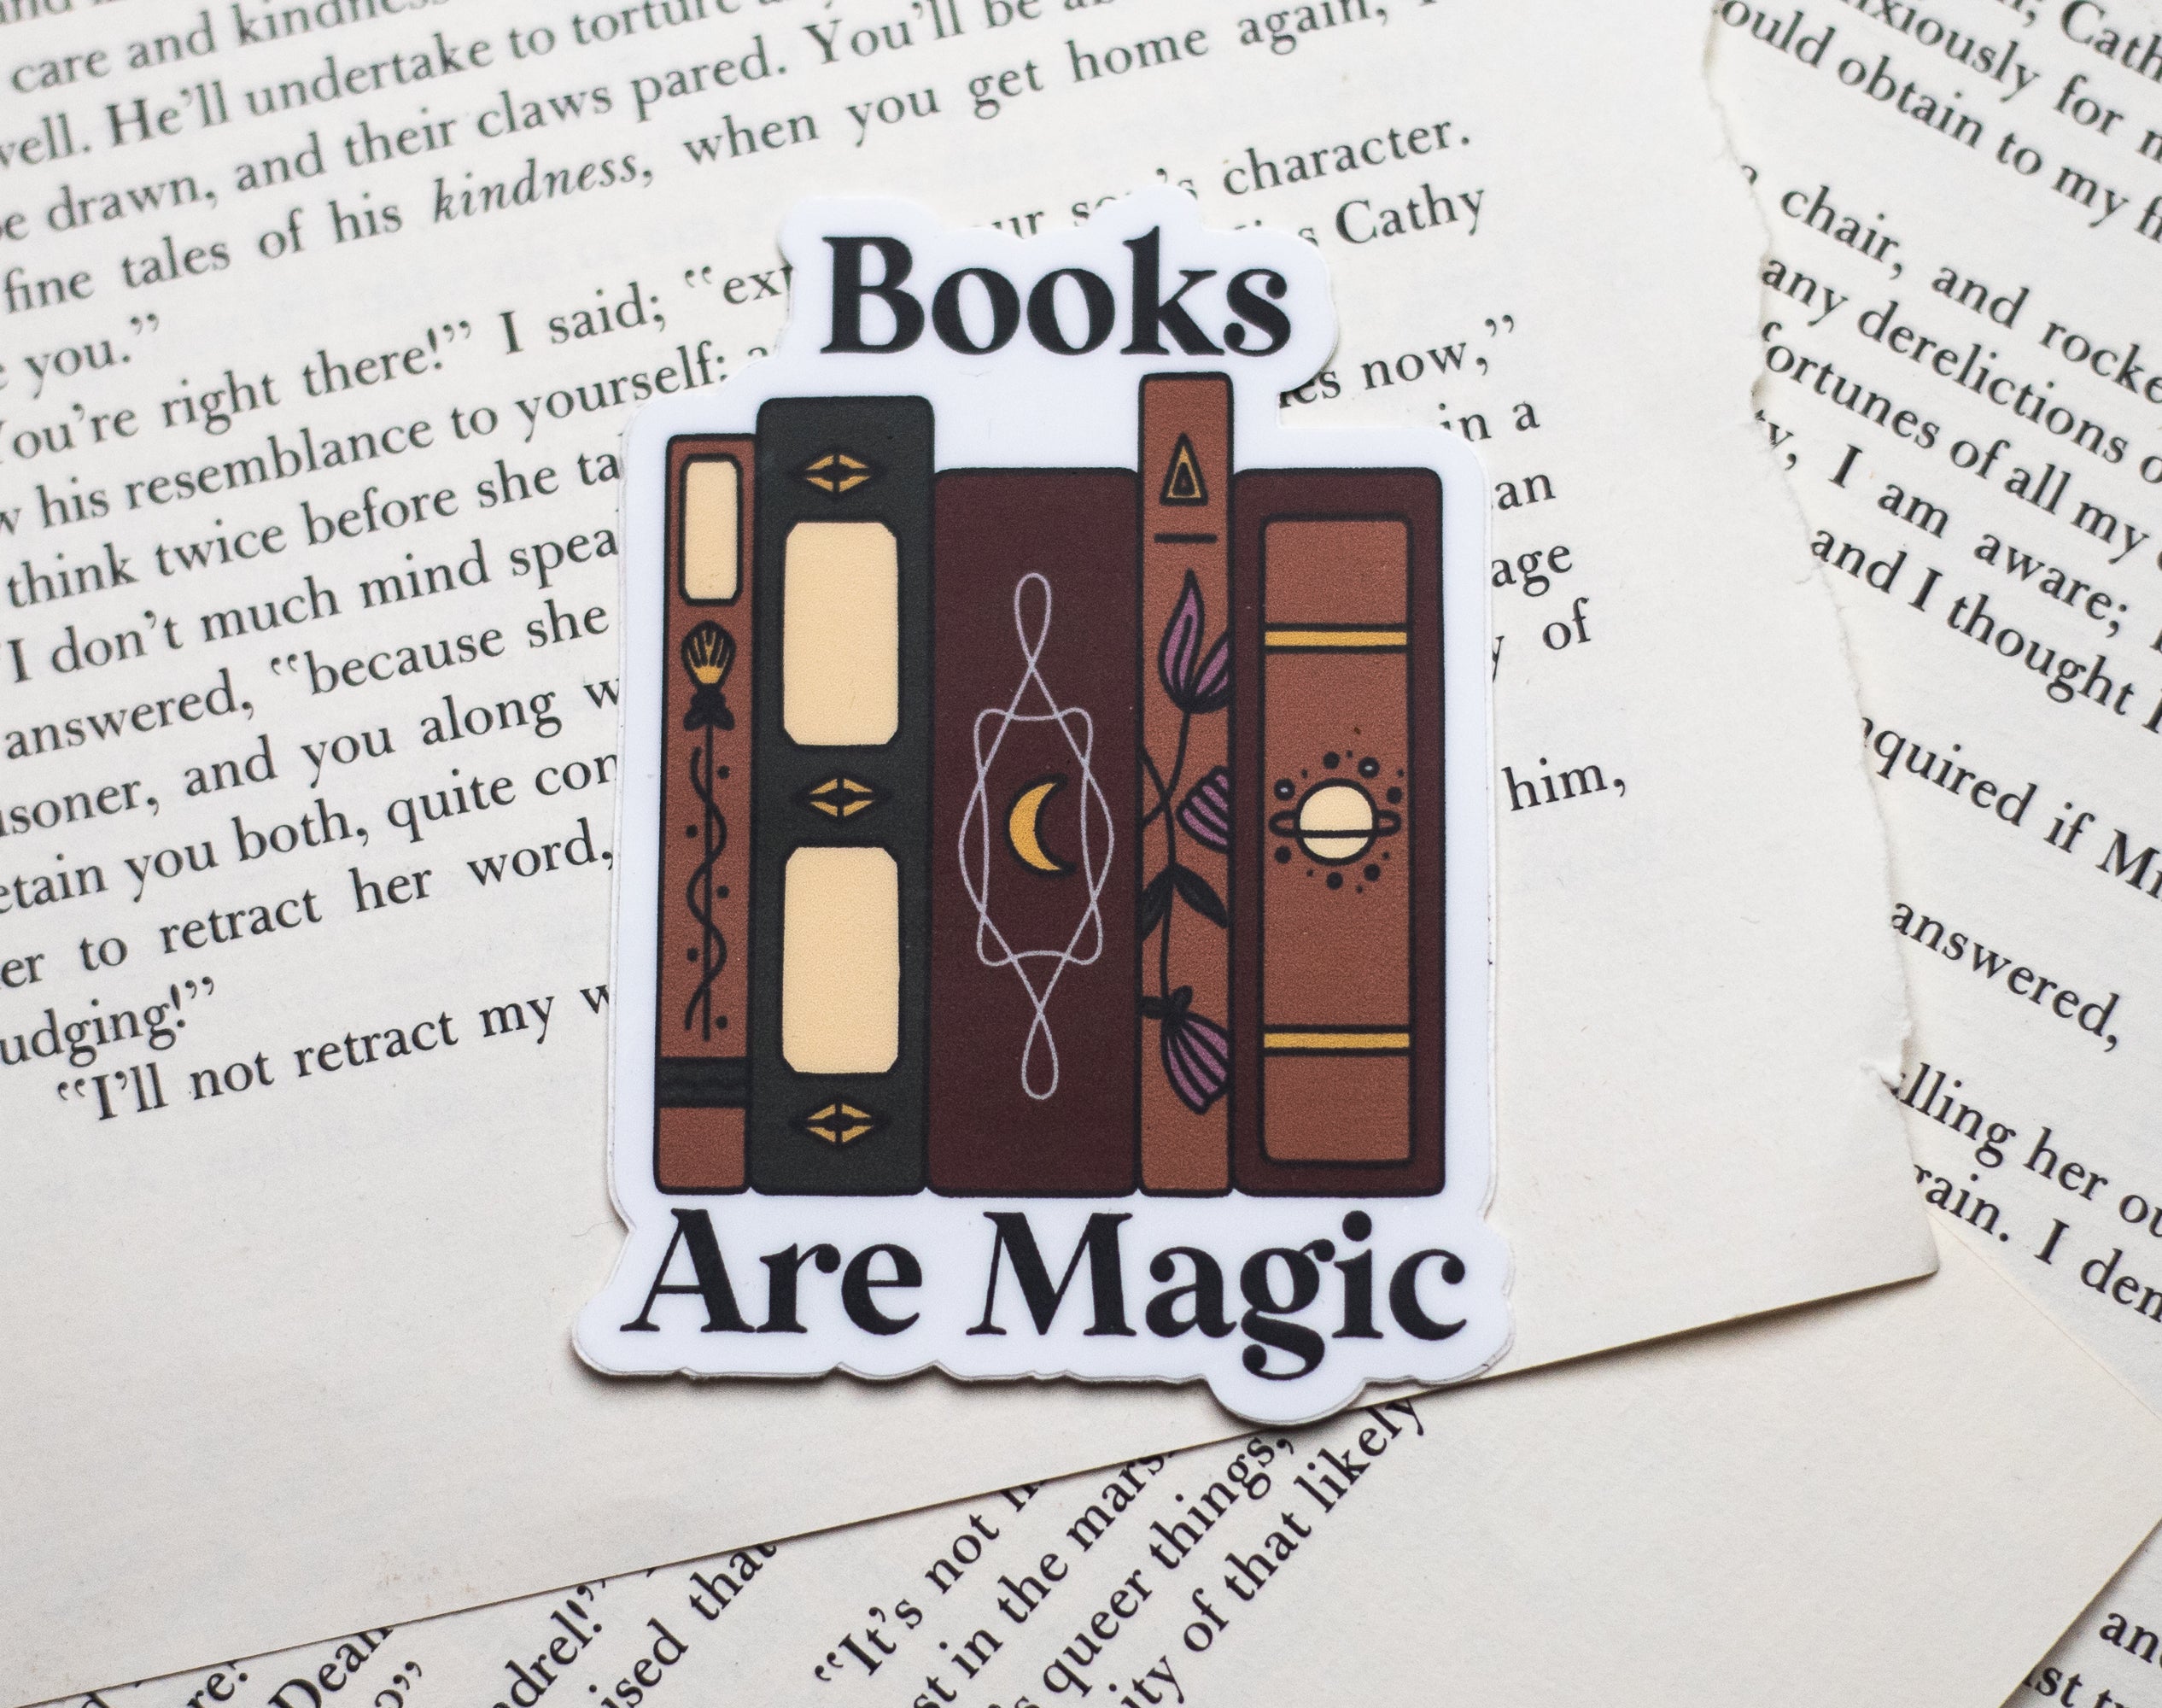 Books are Magic